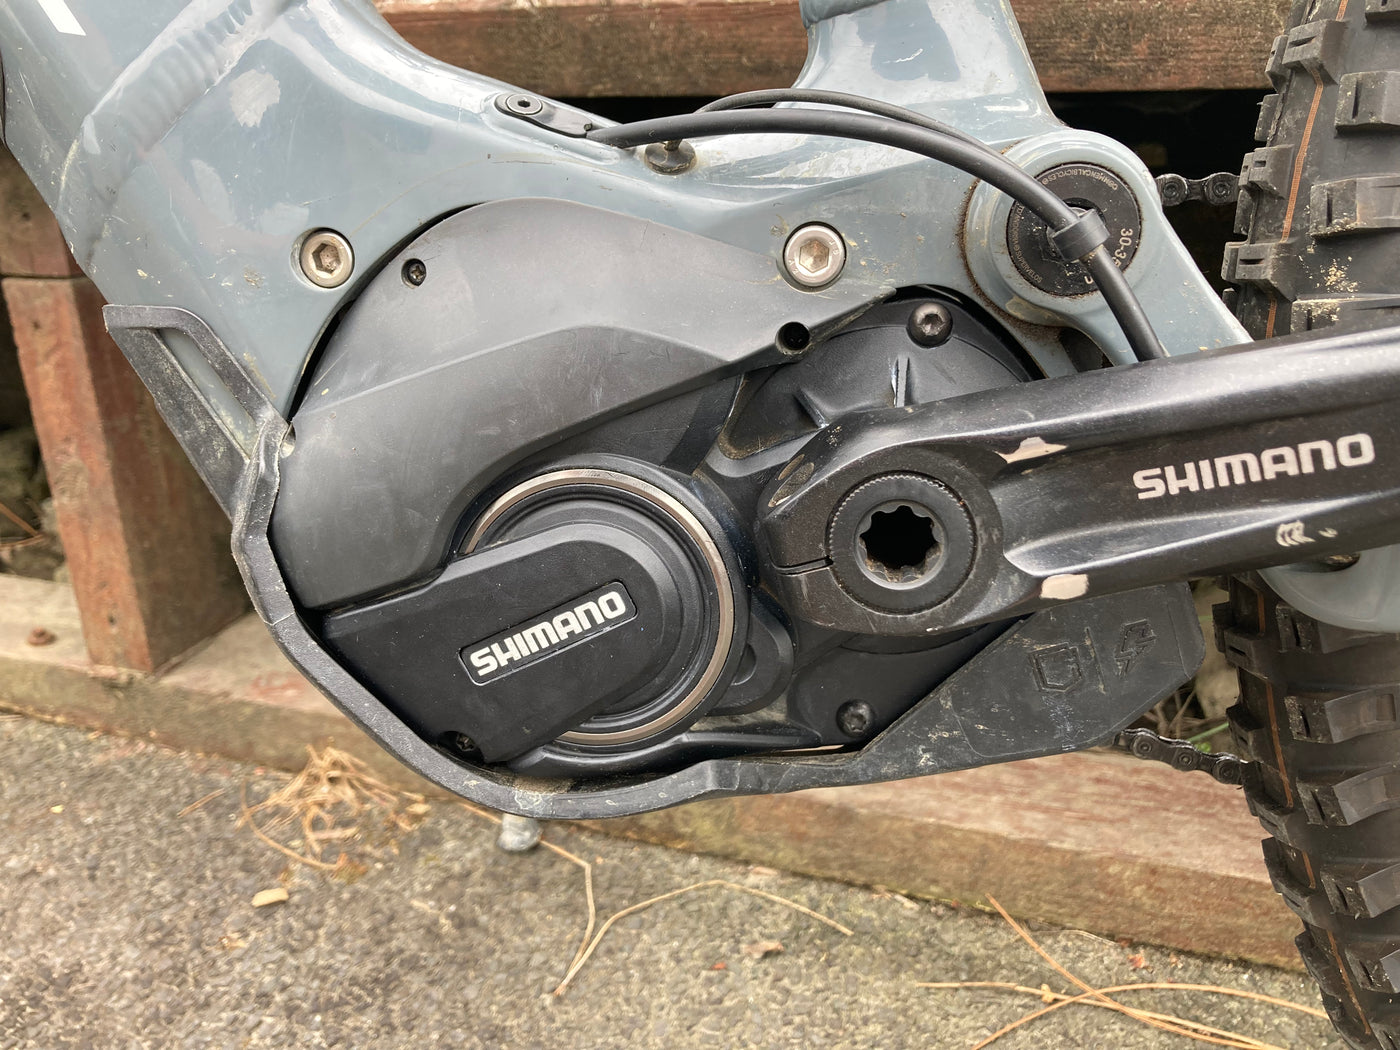 Shimano e8000 Drive Unit Bearing Replacement service